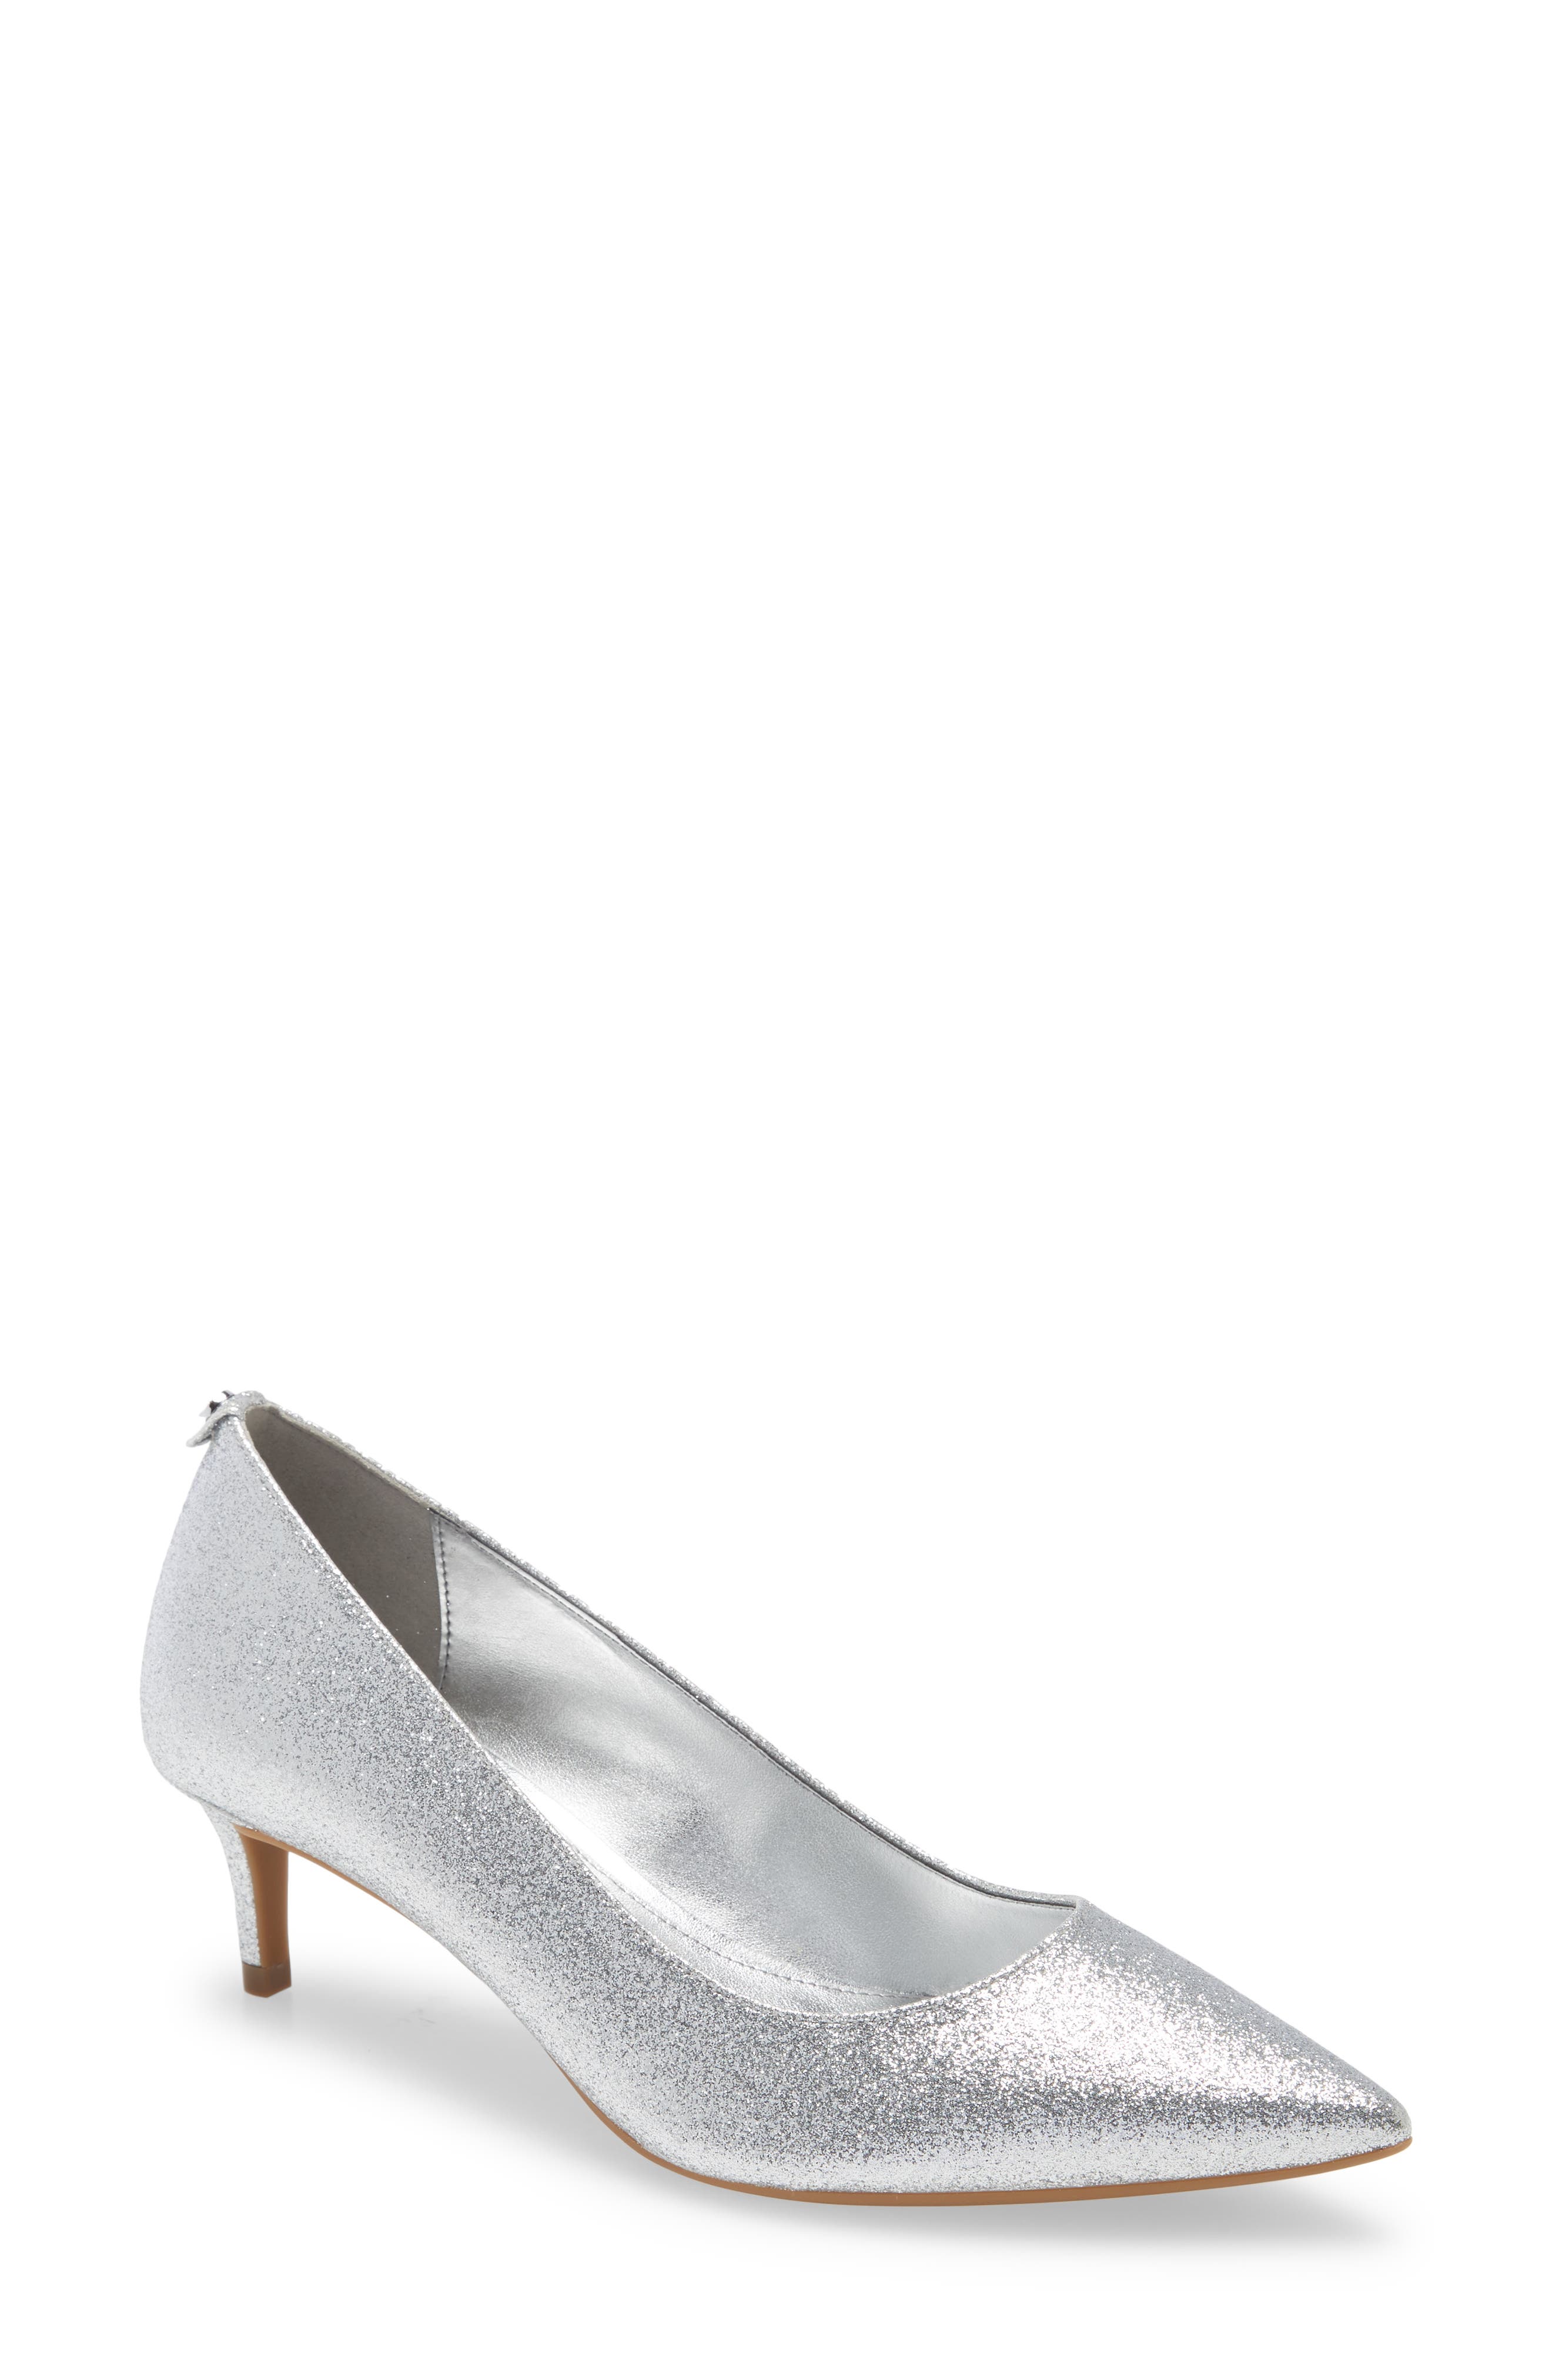 white michael kors heels